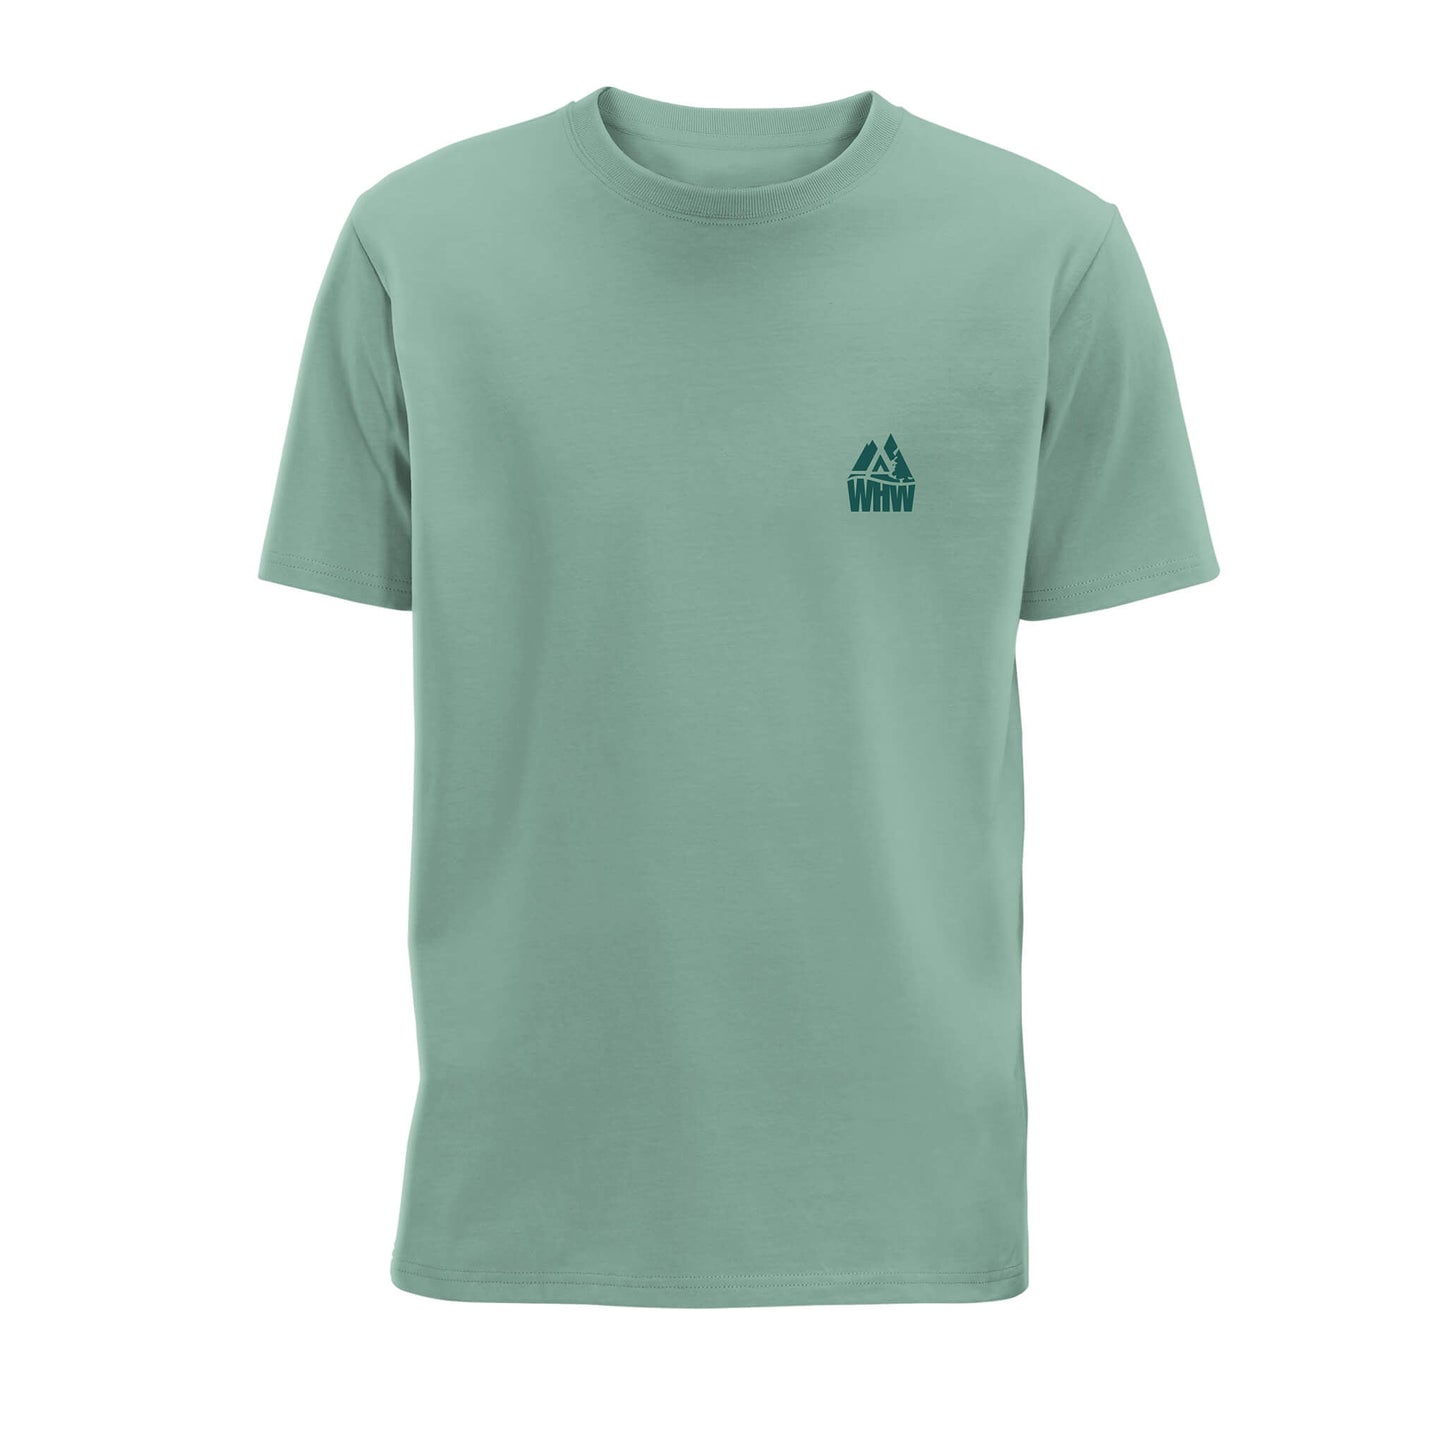 Mountain Organic Cotton T-Shirt - Sage - Front View - West Highland Way